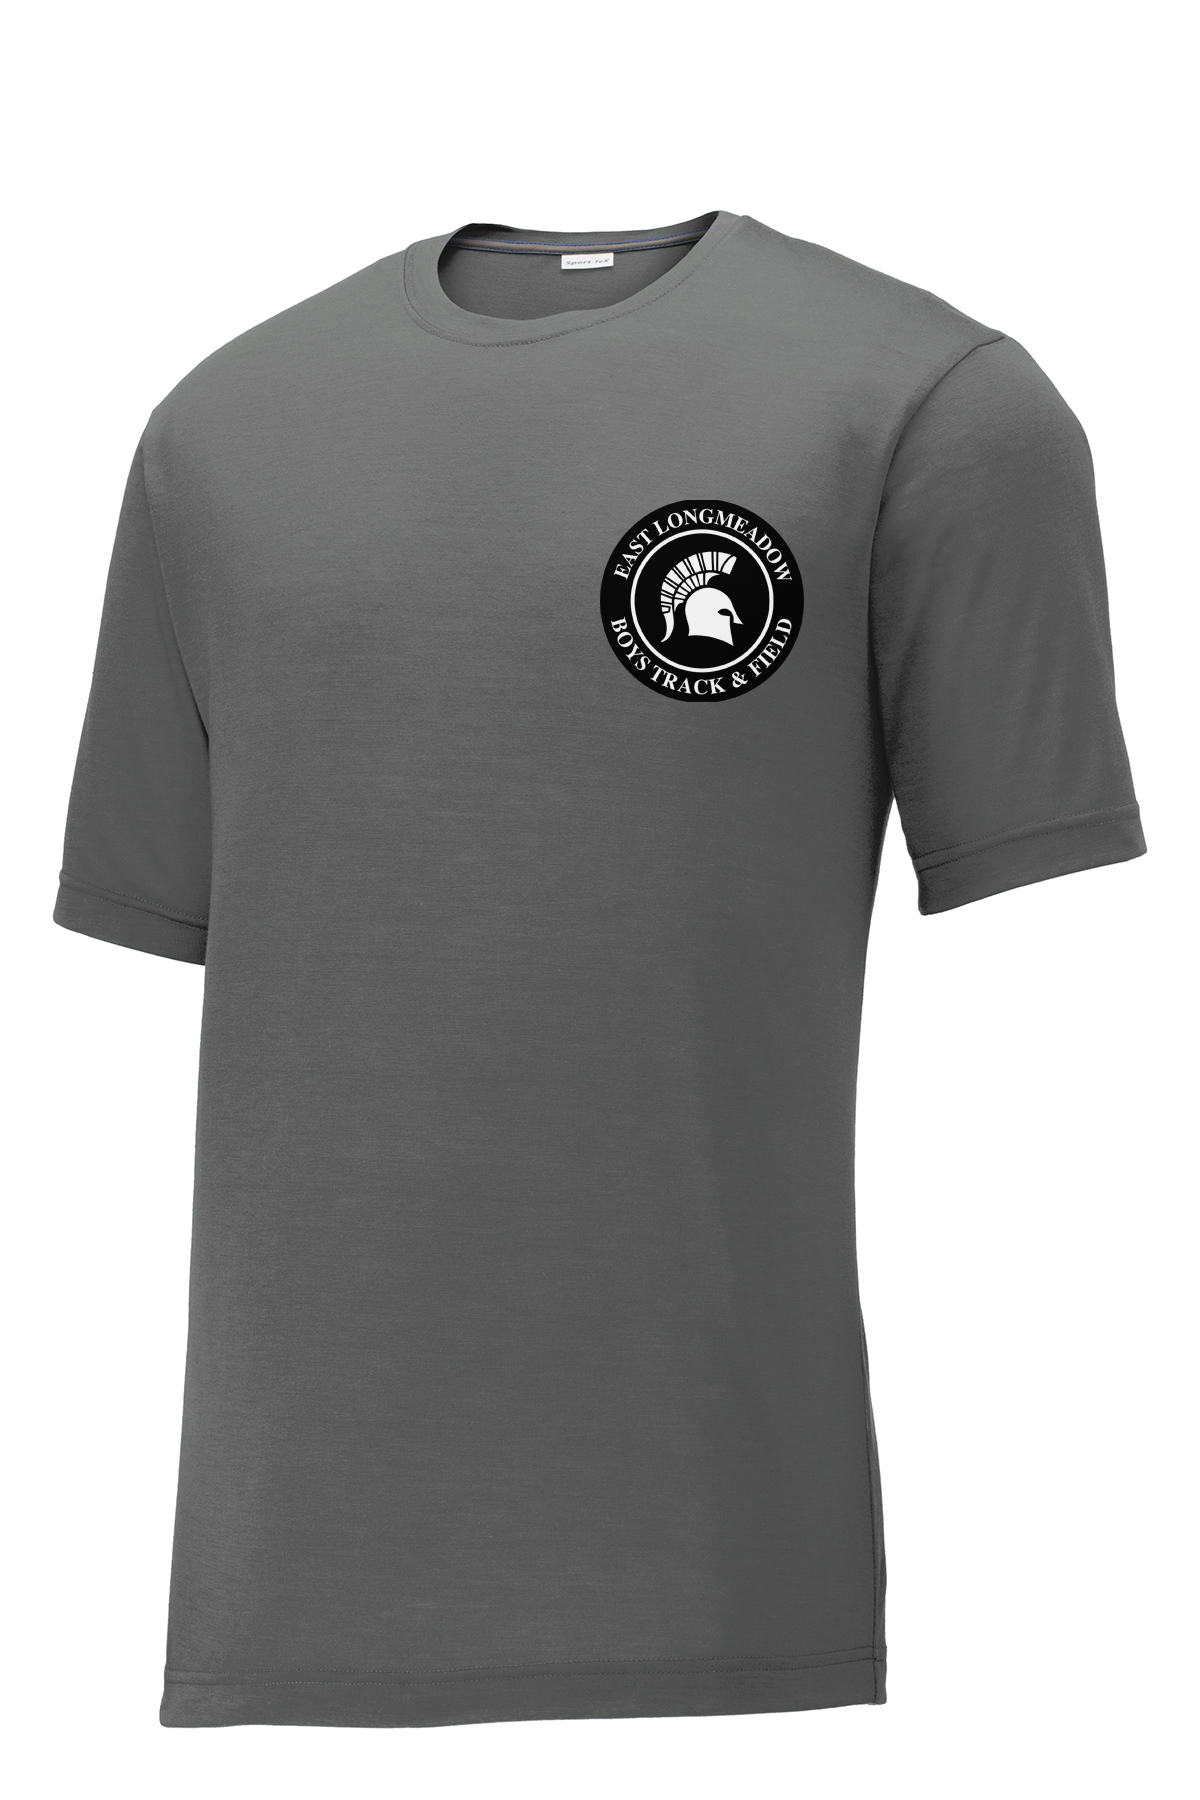 East Longmeadow Boys Track - Men's CottonTouch Performance T-Shirt (Grey)